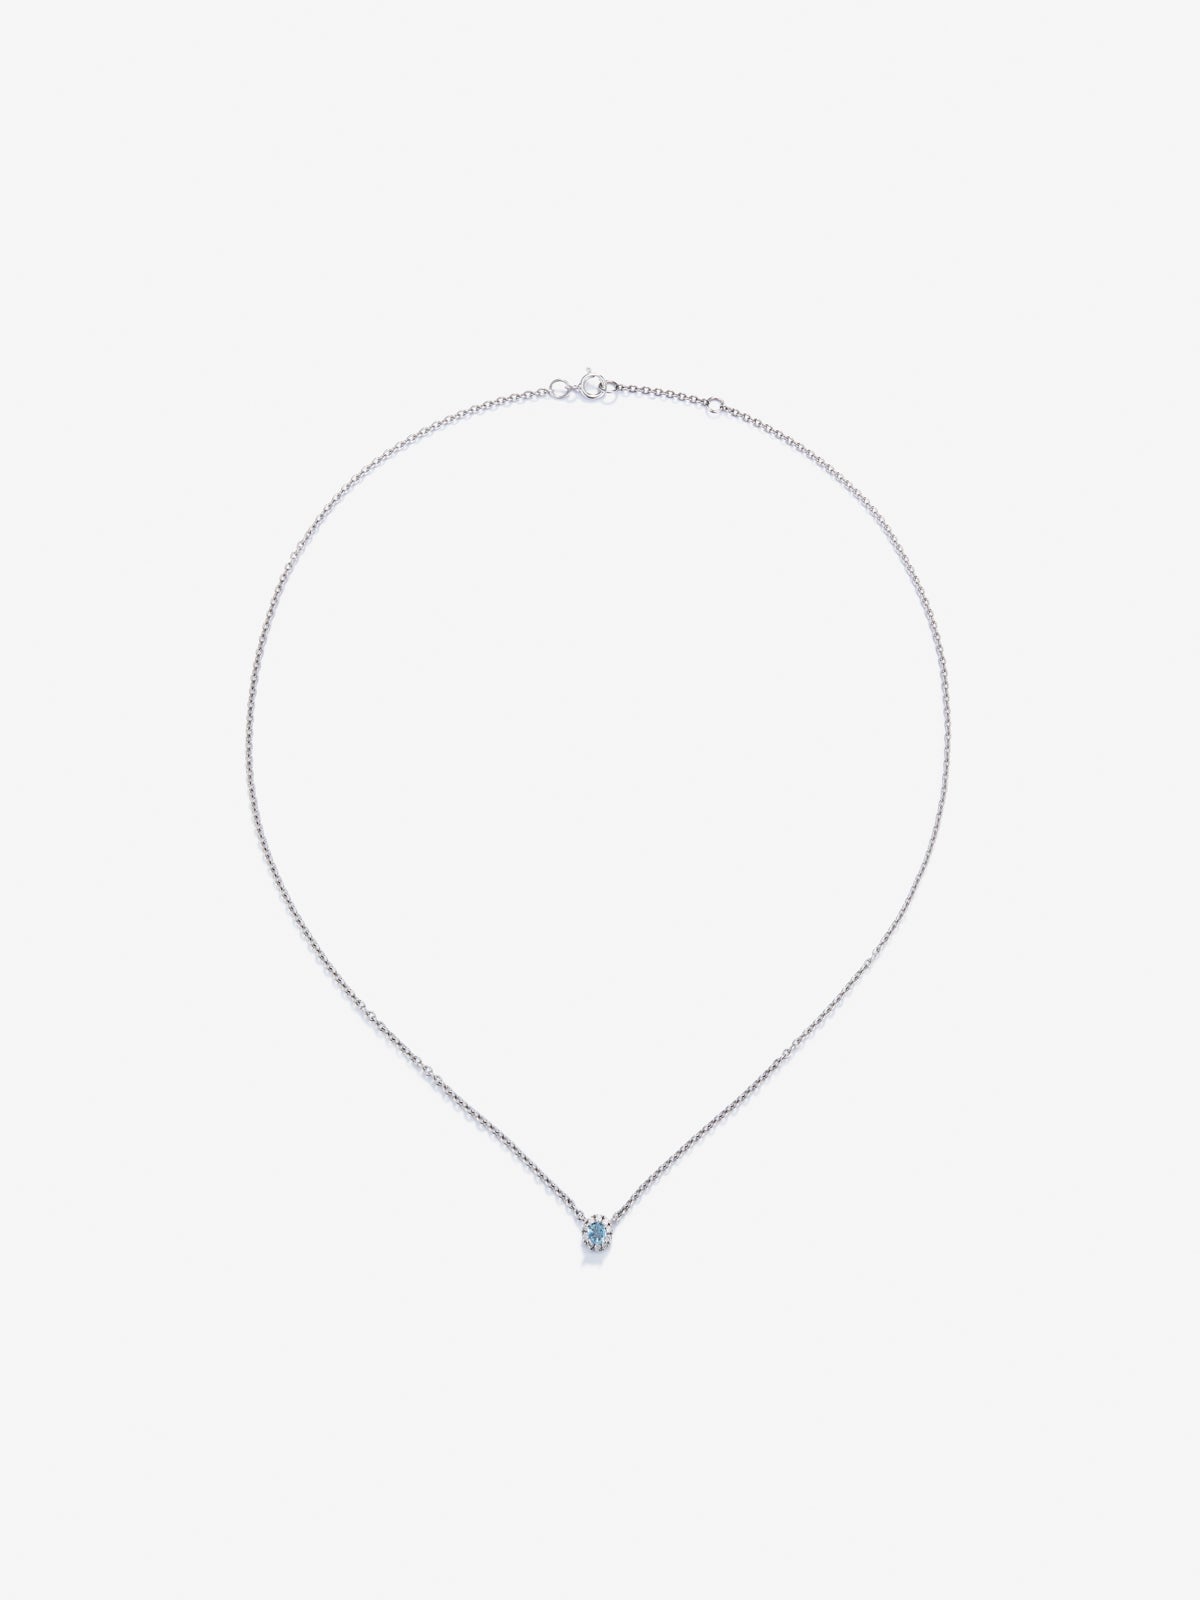 18K white gold chain pendant with aquamarine and diamond